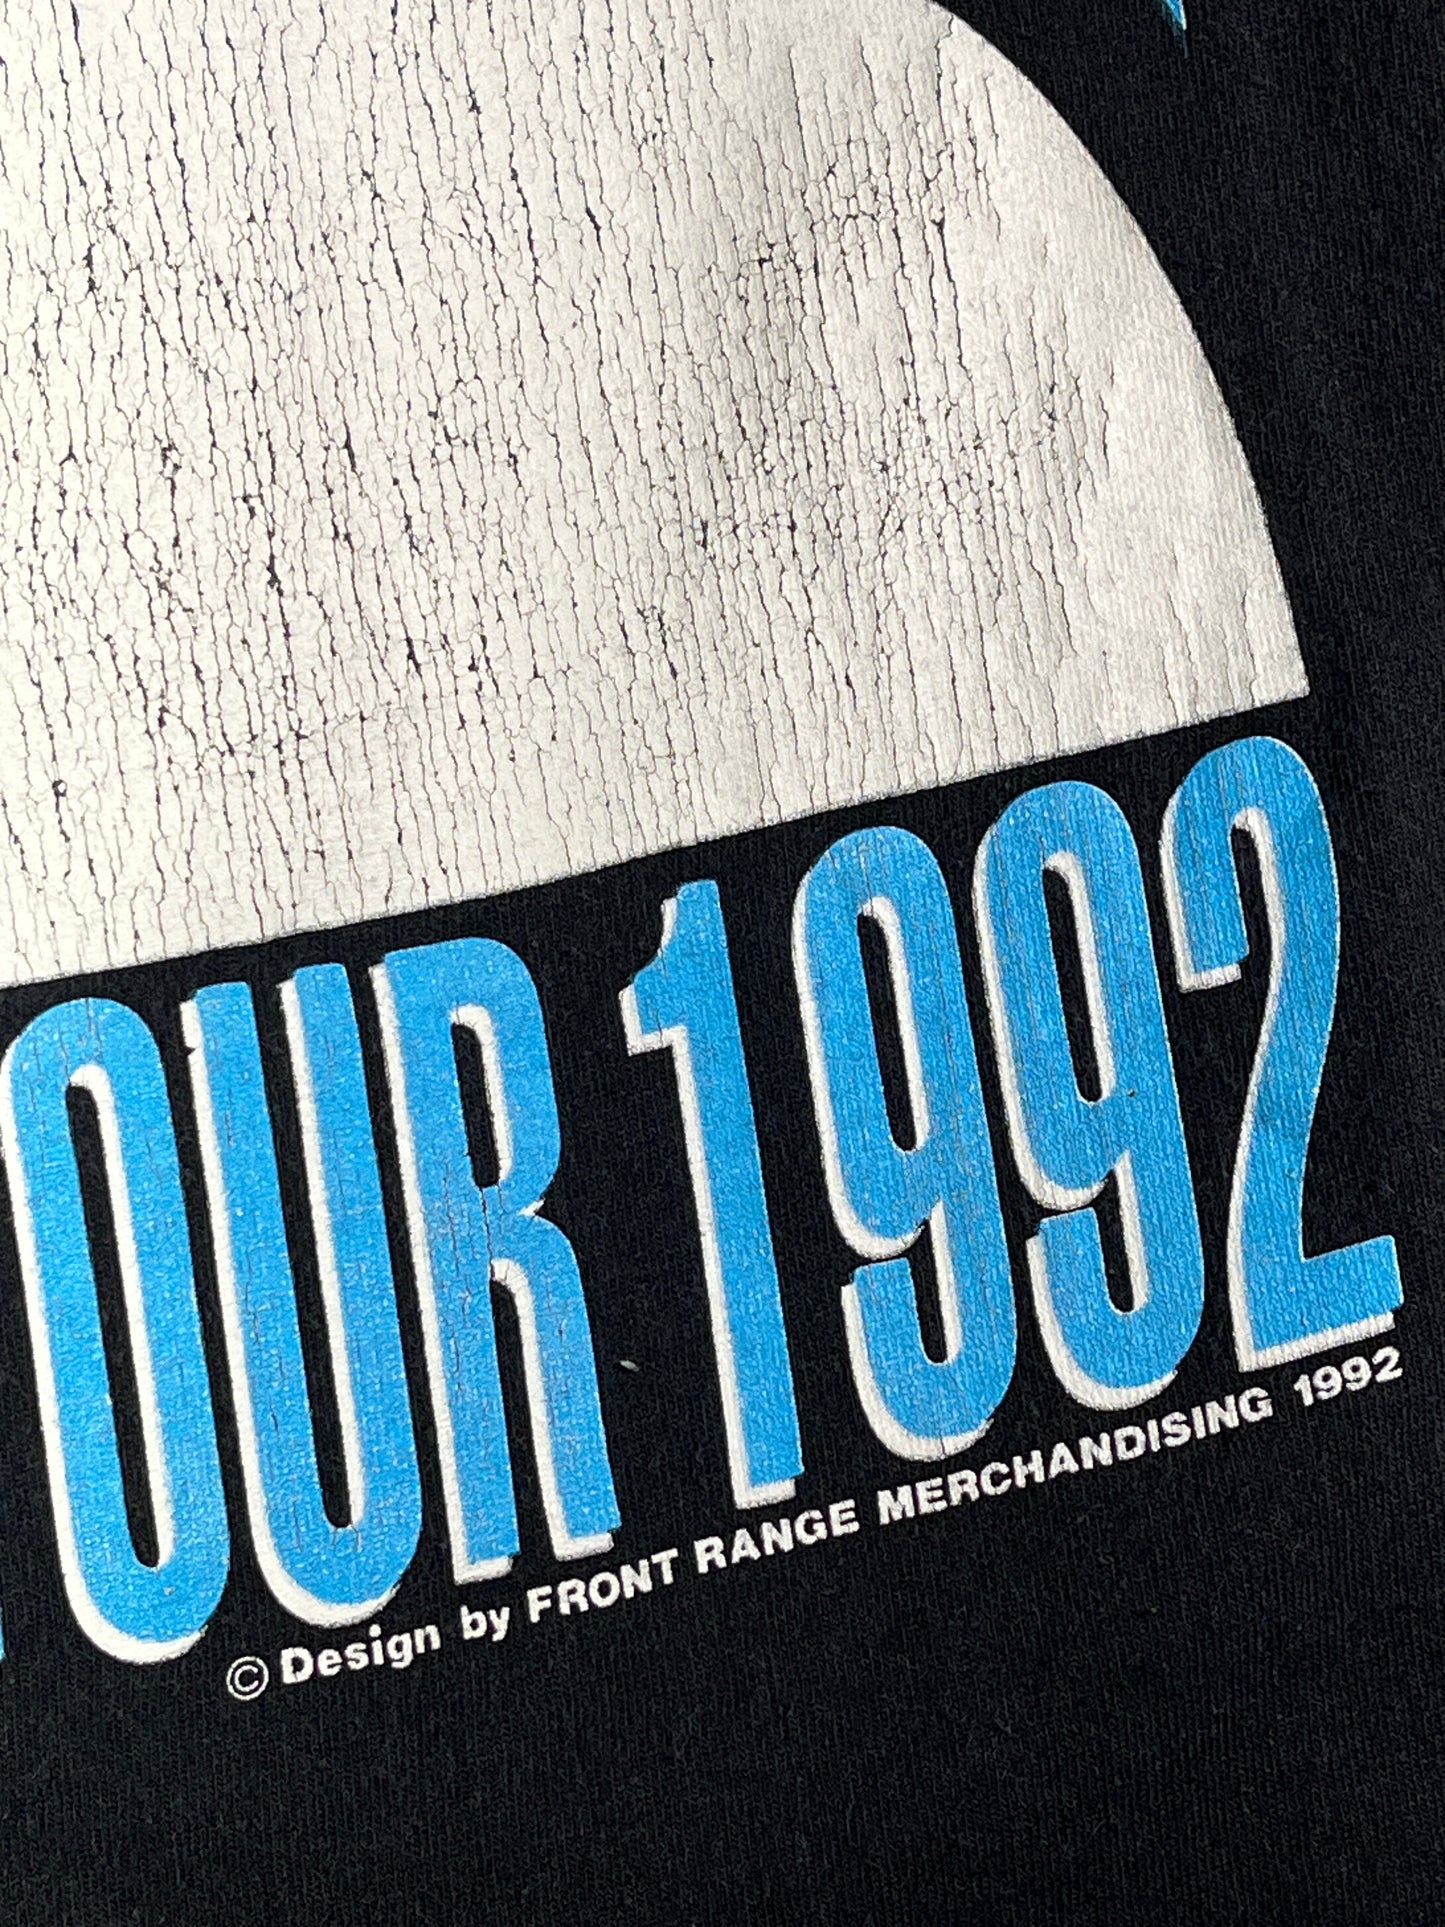 Vintage Sawyer Brown T-Shirt Band 1992 Single Stitch Backside Tour Dirt Road